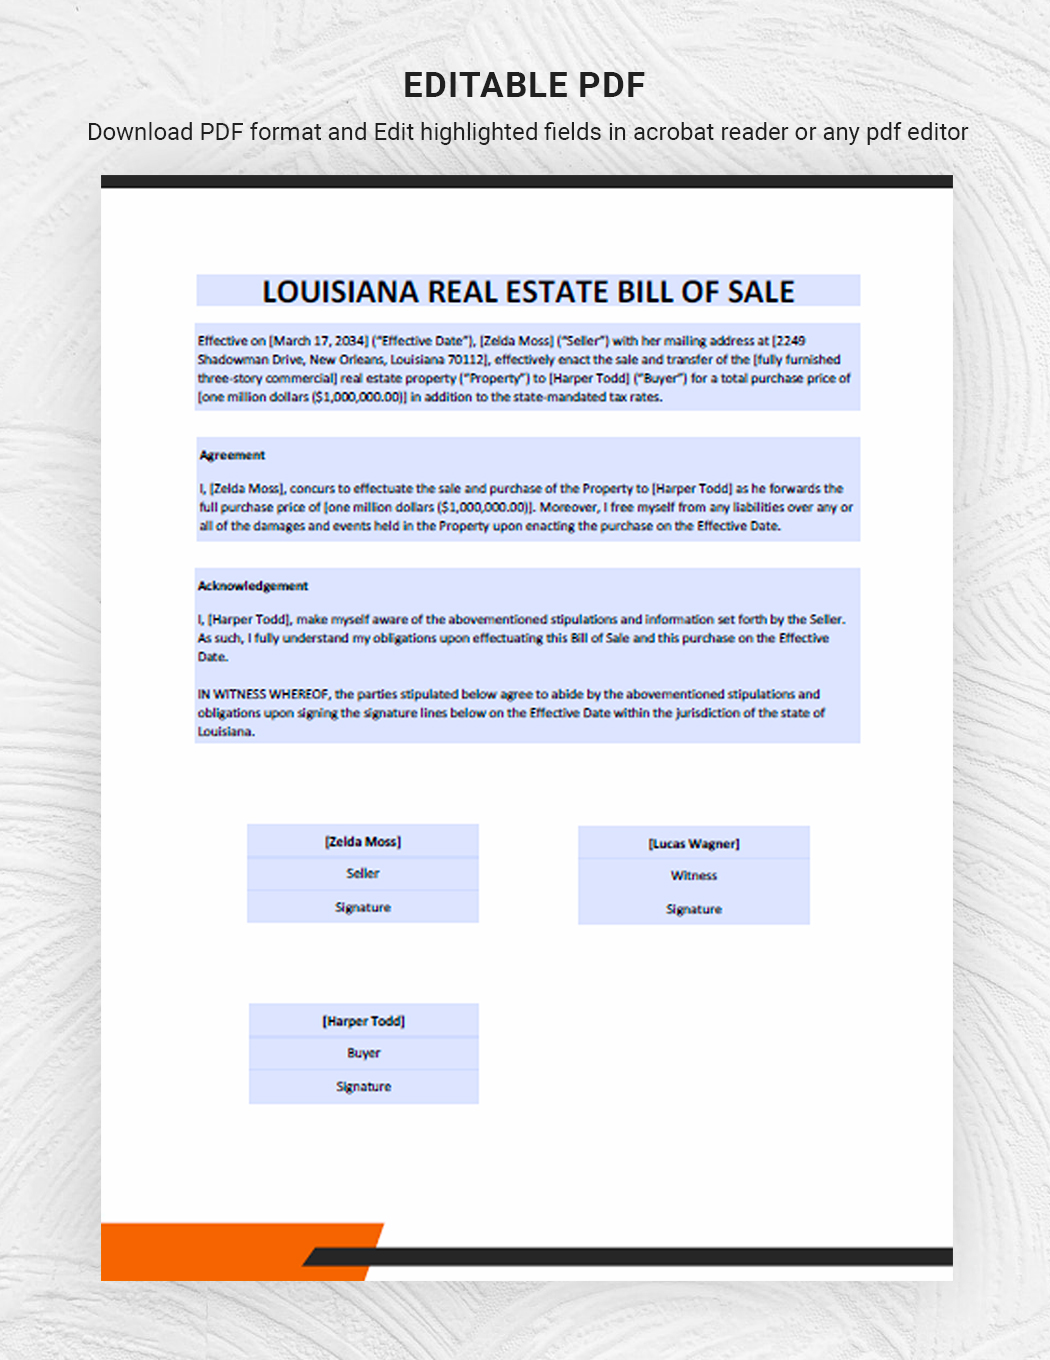 Louisiana Real Estate Bill of Sale Form Template